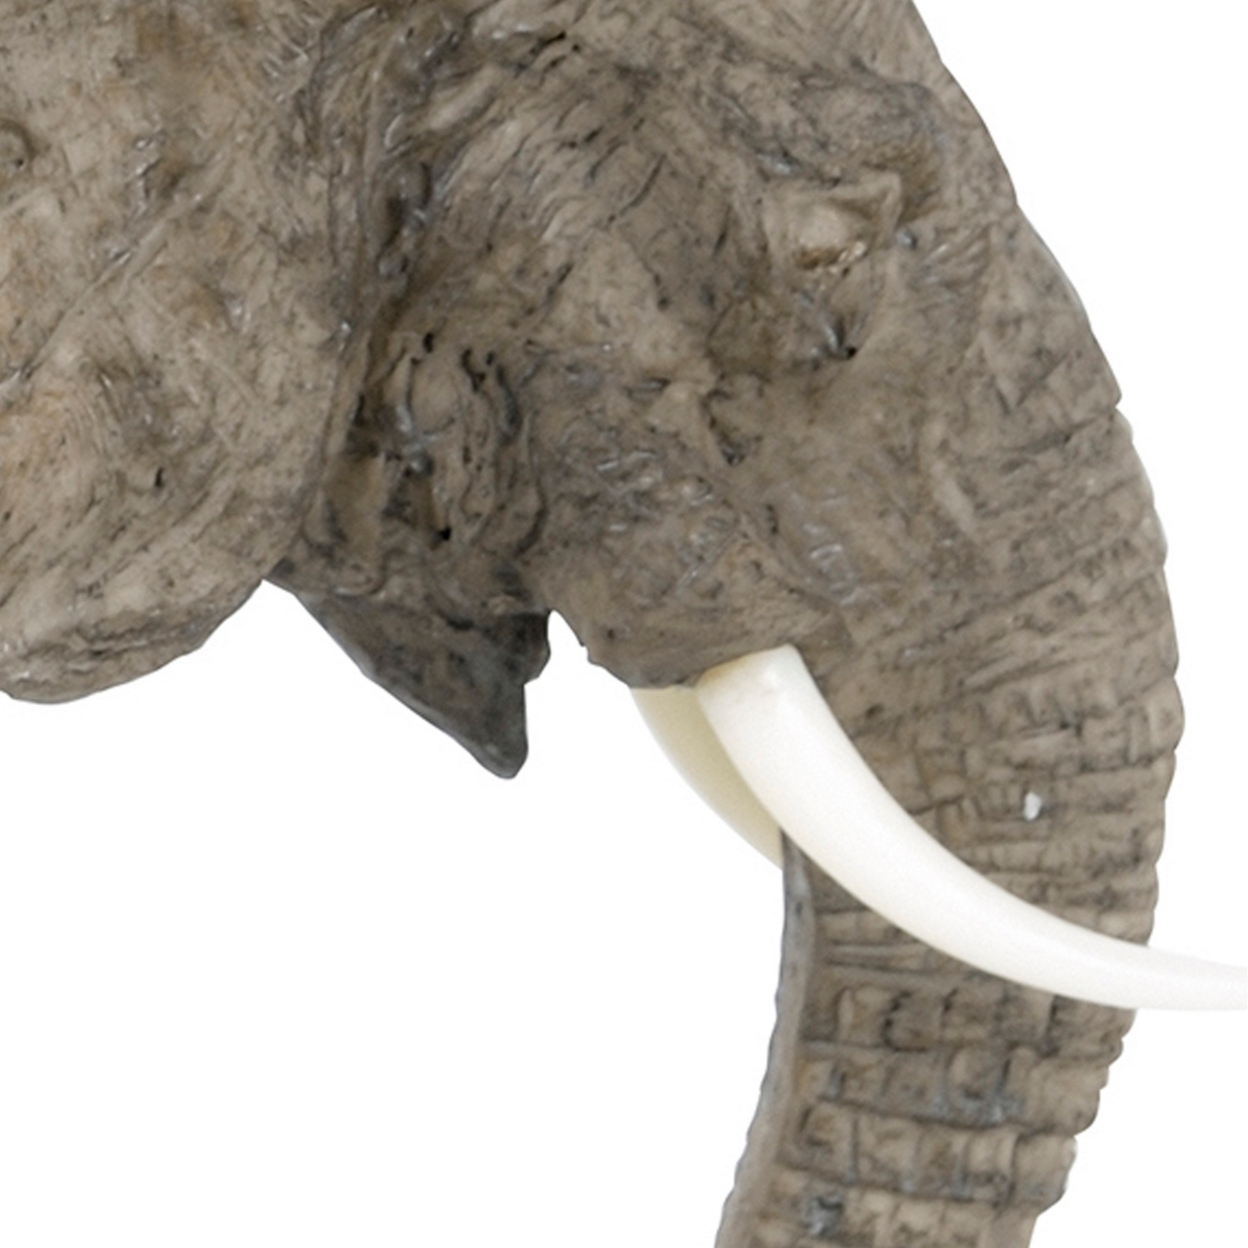 Don 13 Inch Walking Elephant Accent Figurine, Realistic Polyresin, Gray- Saltoro Sherpi